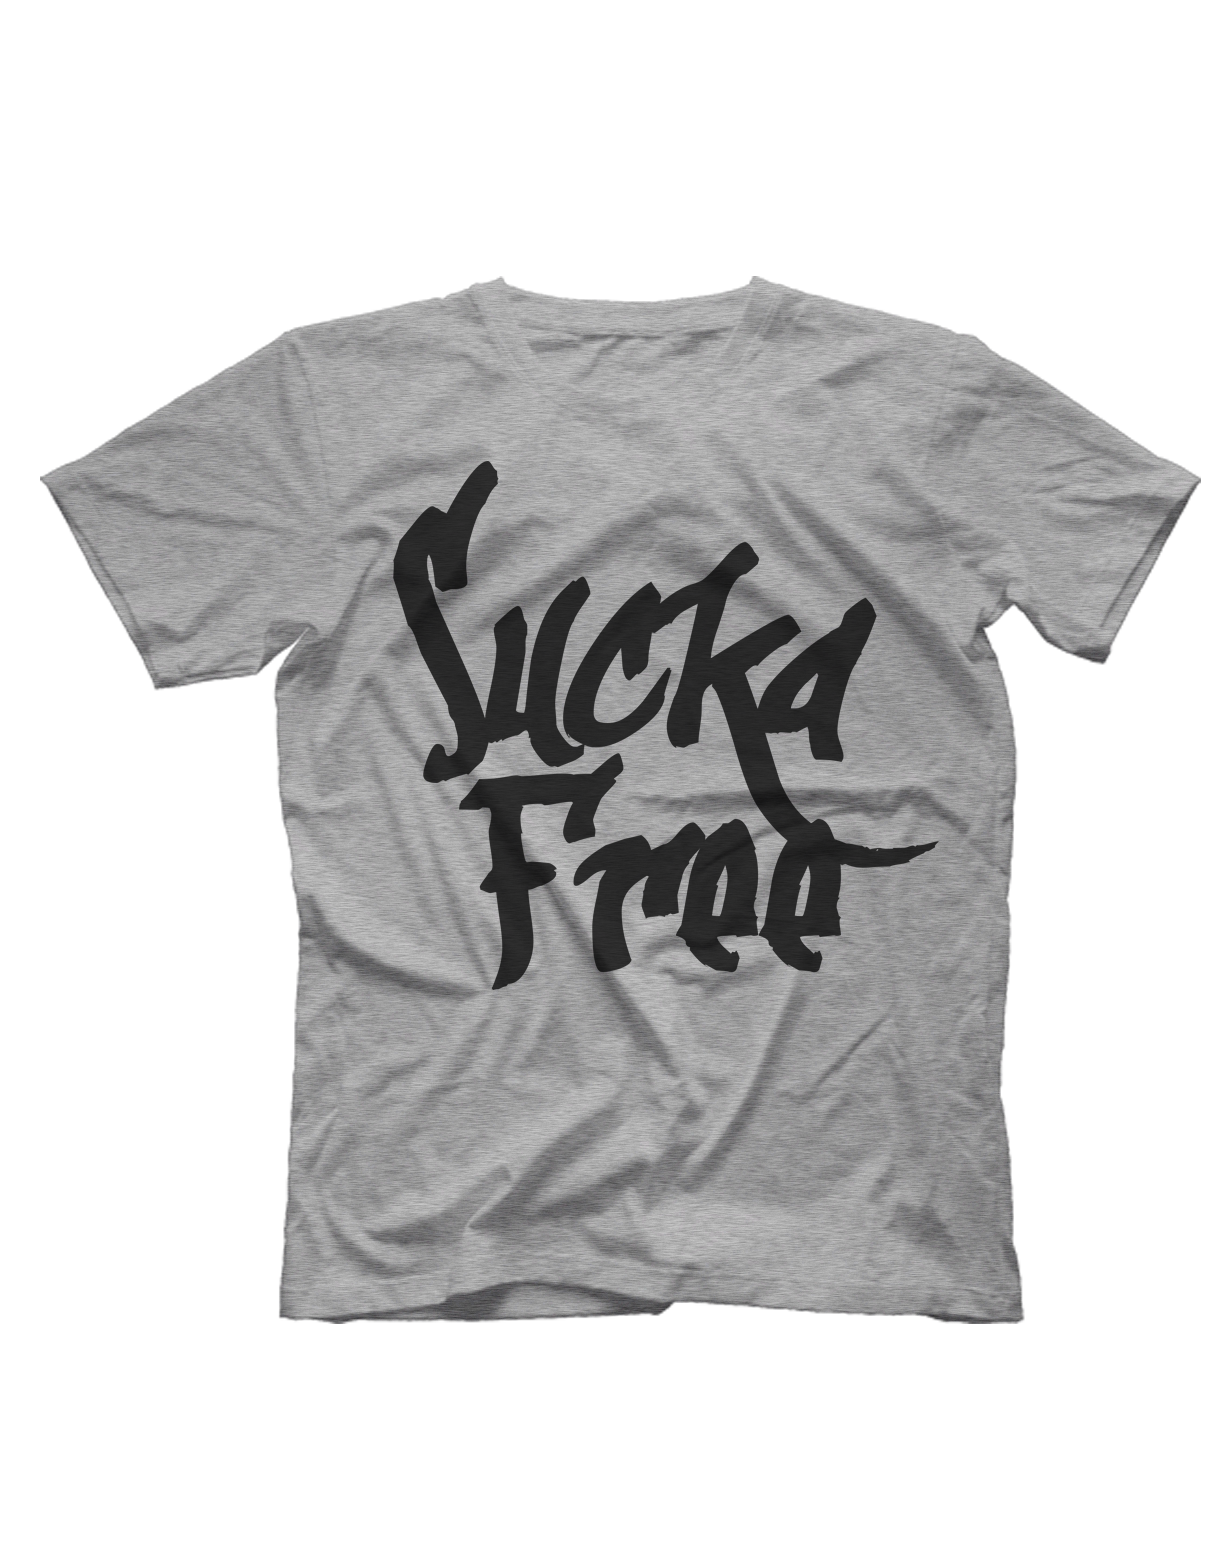 Sucka Free Short Sleeve T-shirt